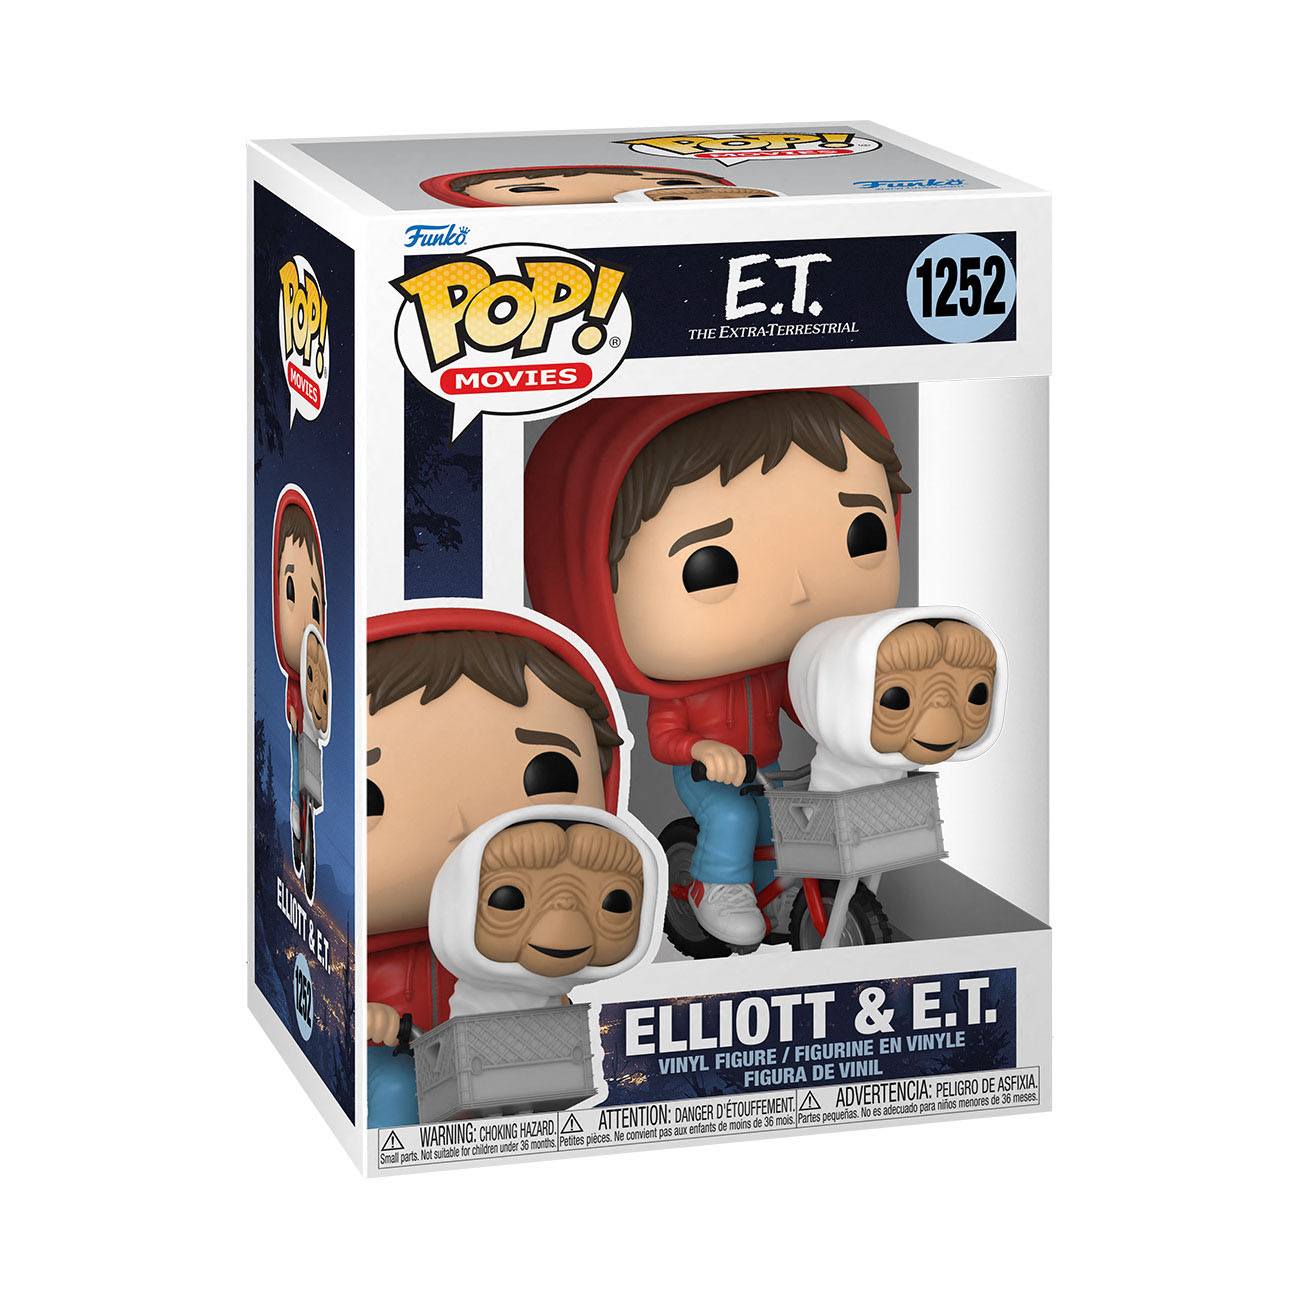 Elliot & E.T.